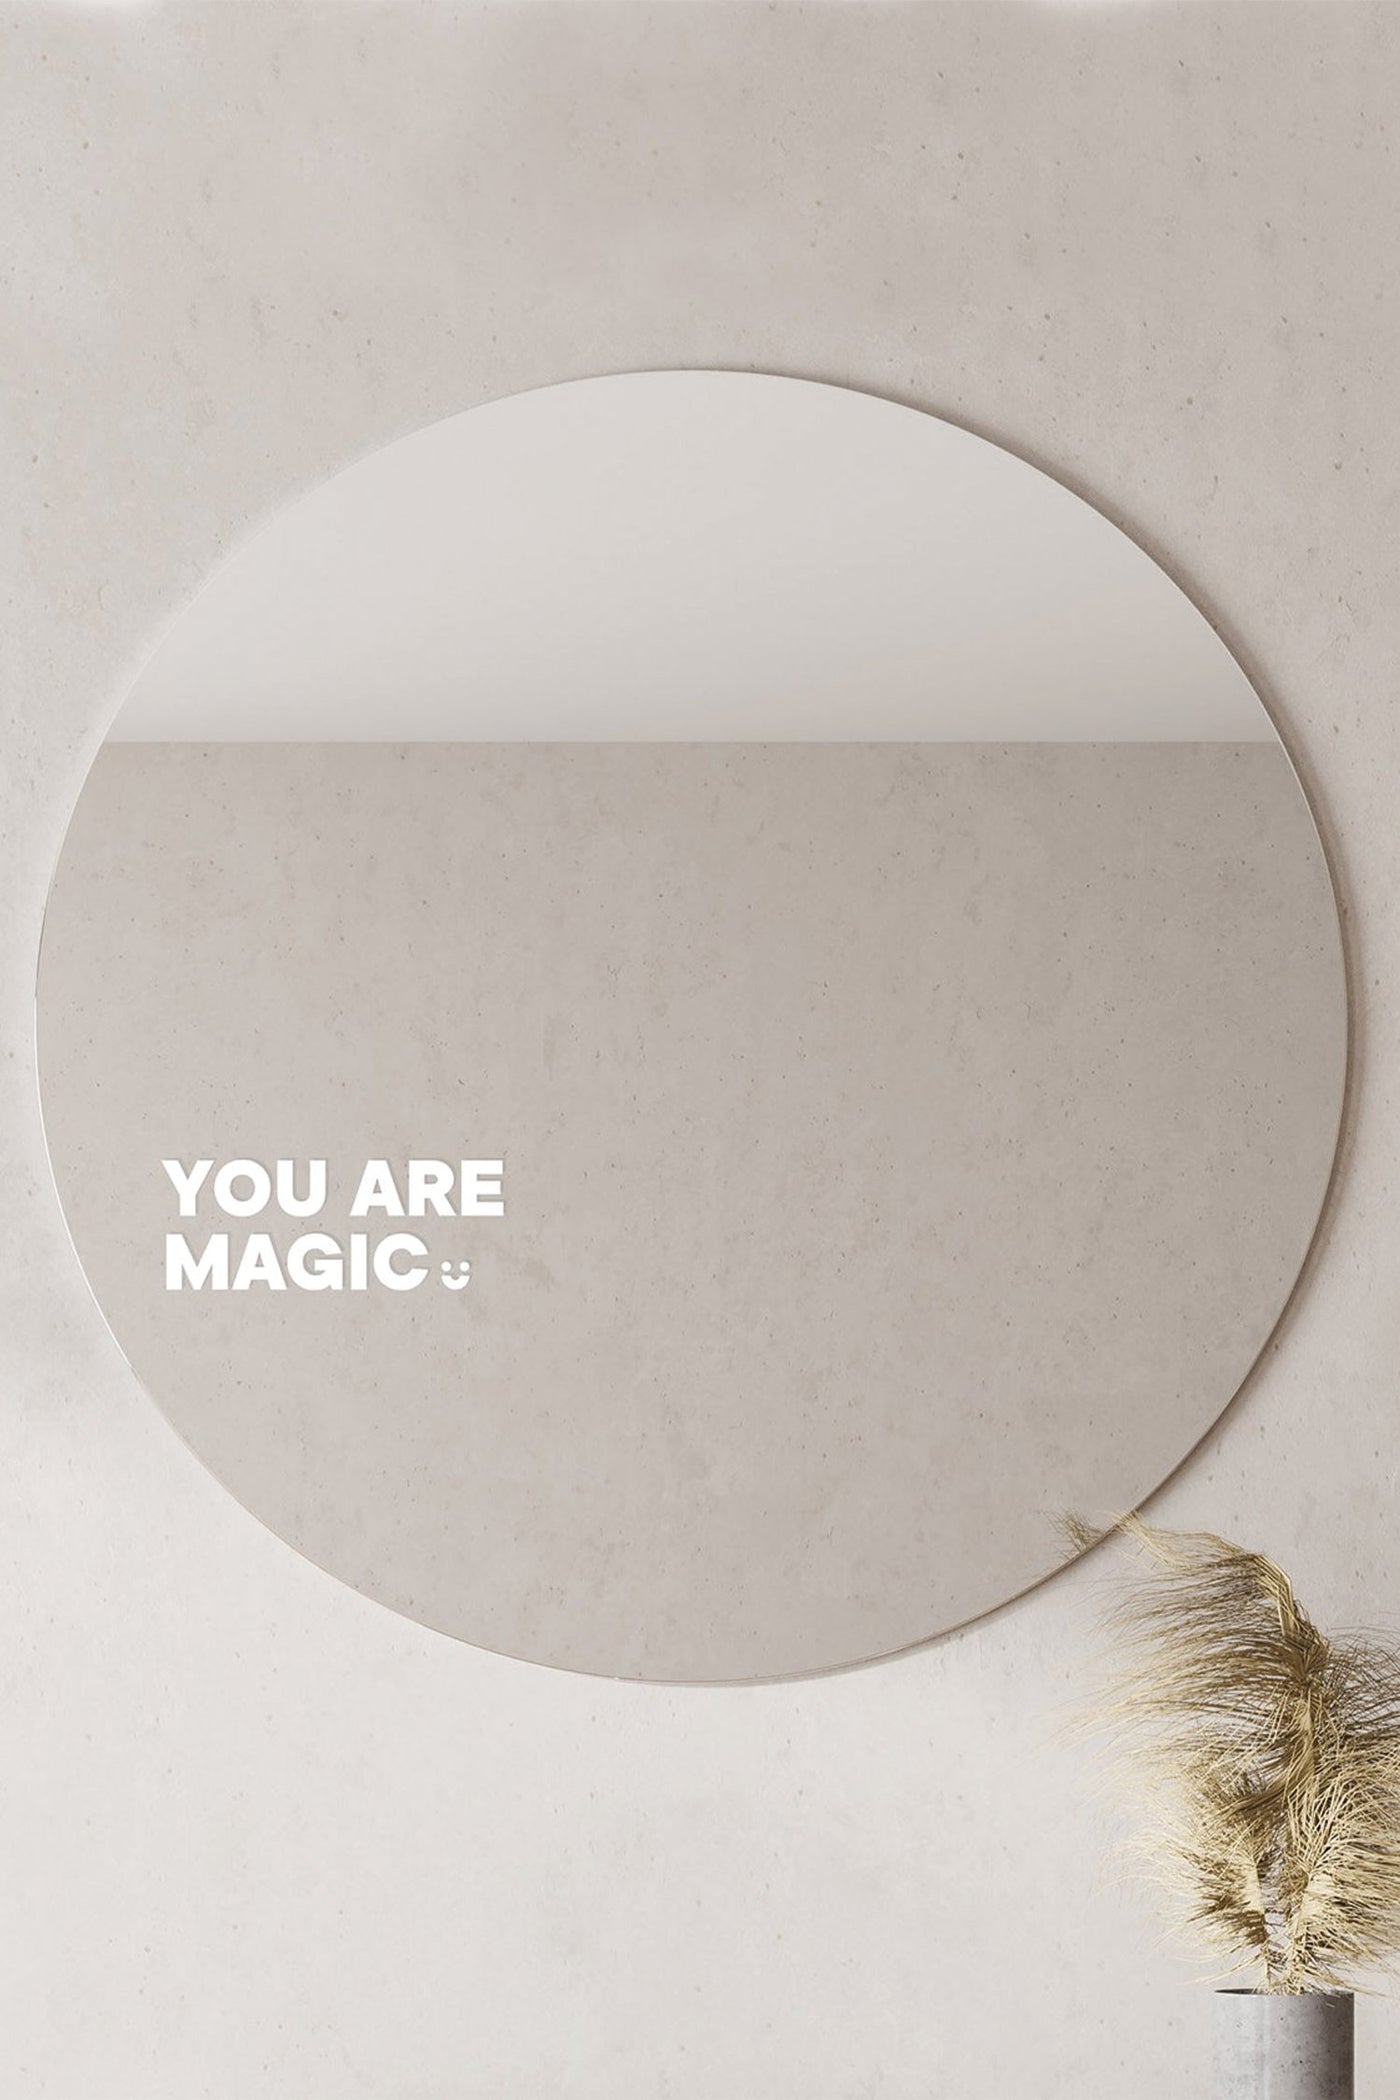 YOU ARE MAGIC. - Affirmation Mirror Sticker Affirmation Stickers Selfawear 